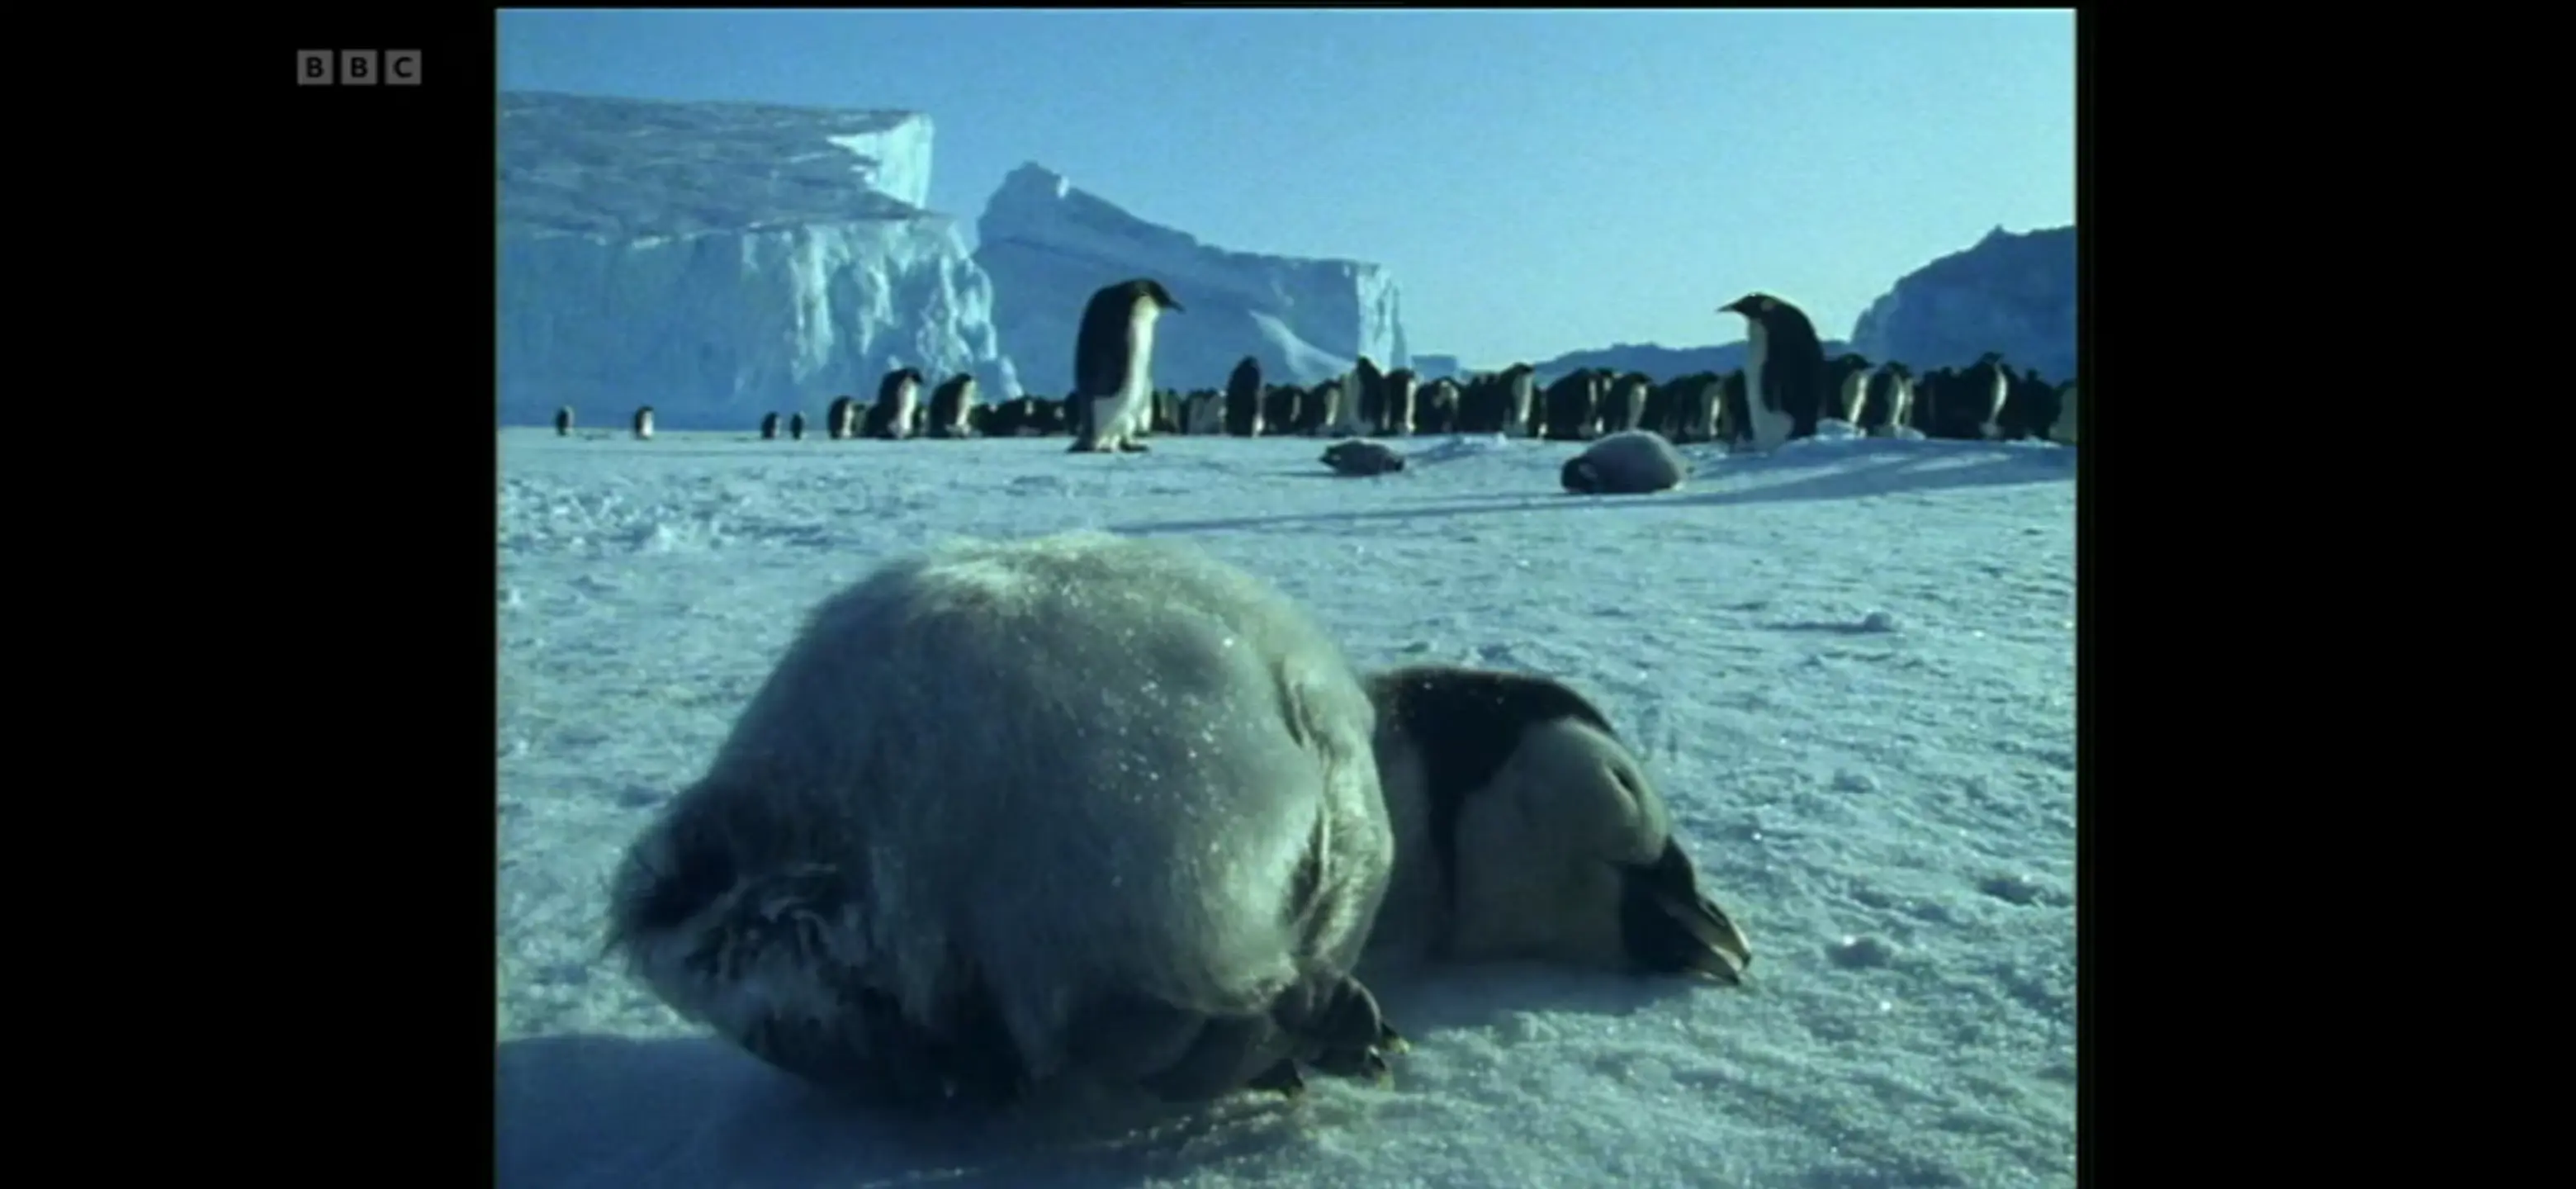 Emperor penguin (Aptenodytes forsteri) as shown in Life in the Freezer - The Big Freeze